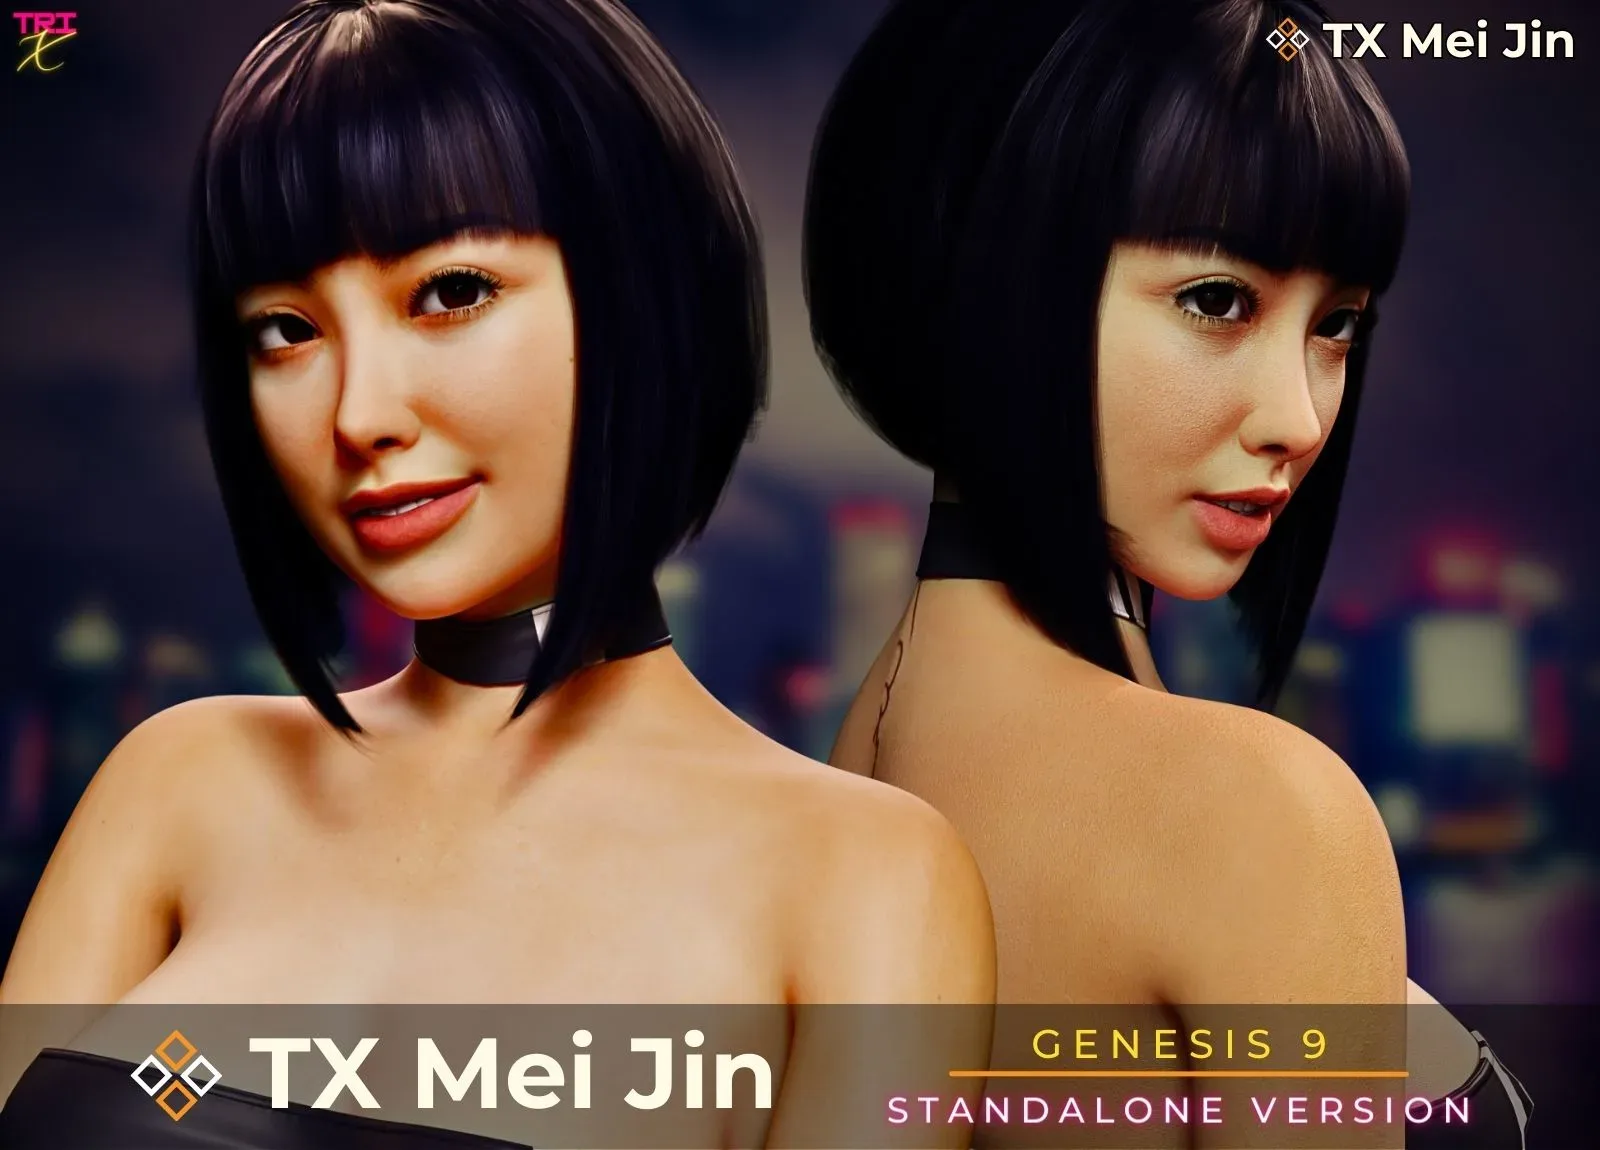 TX Mei Jin Standalone Version for G9